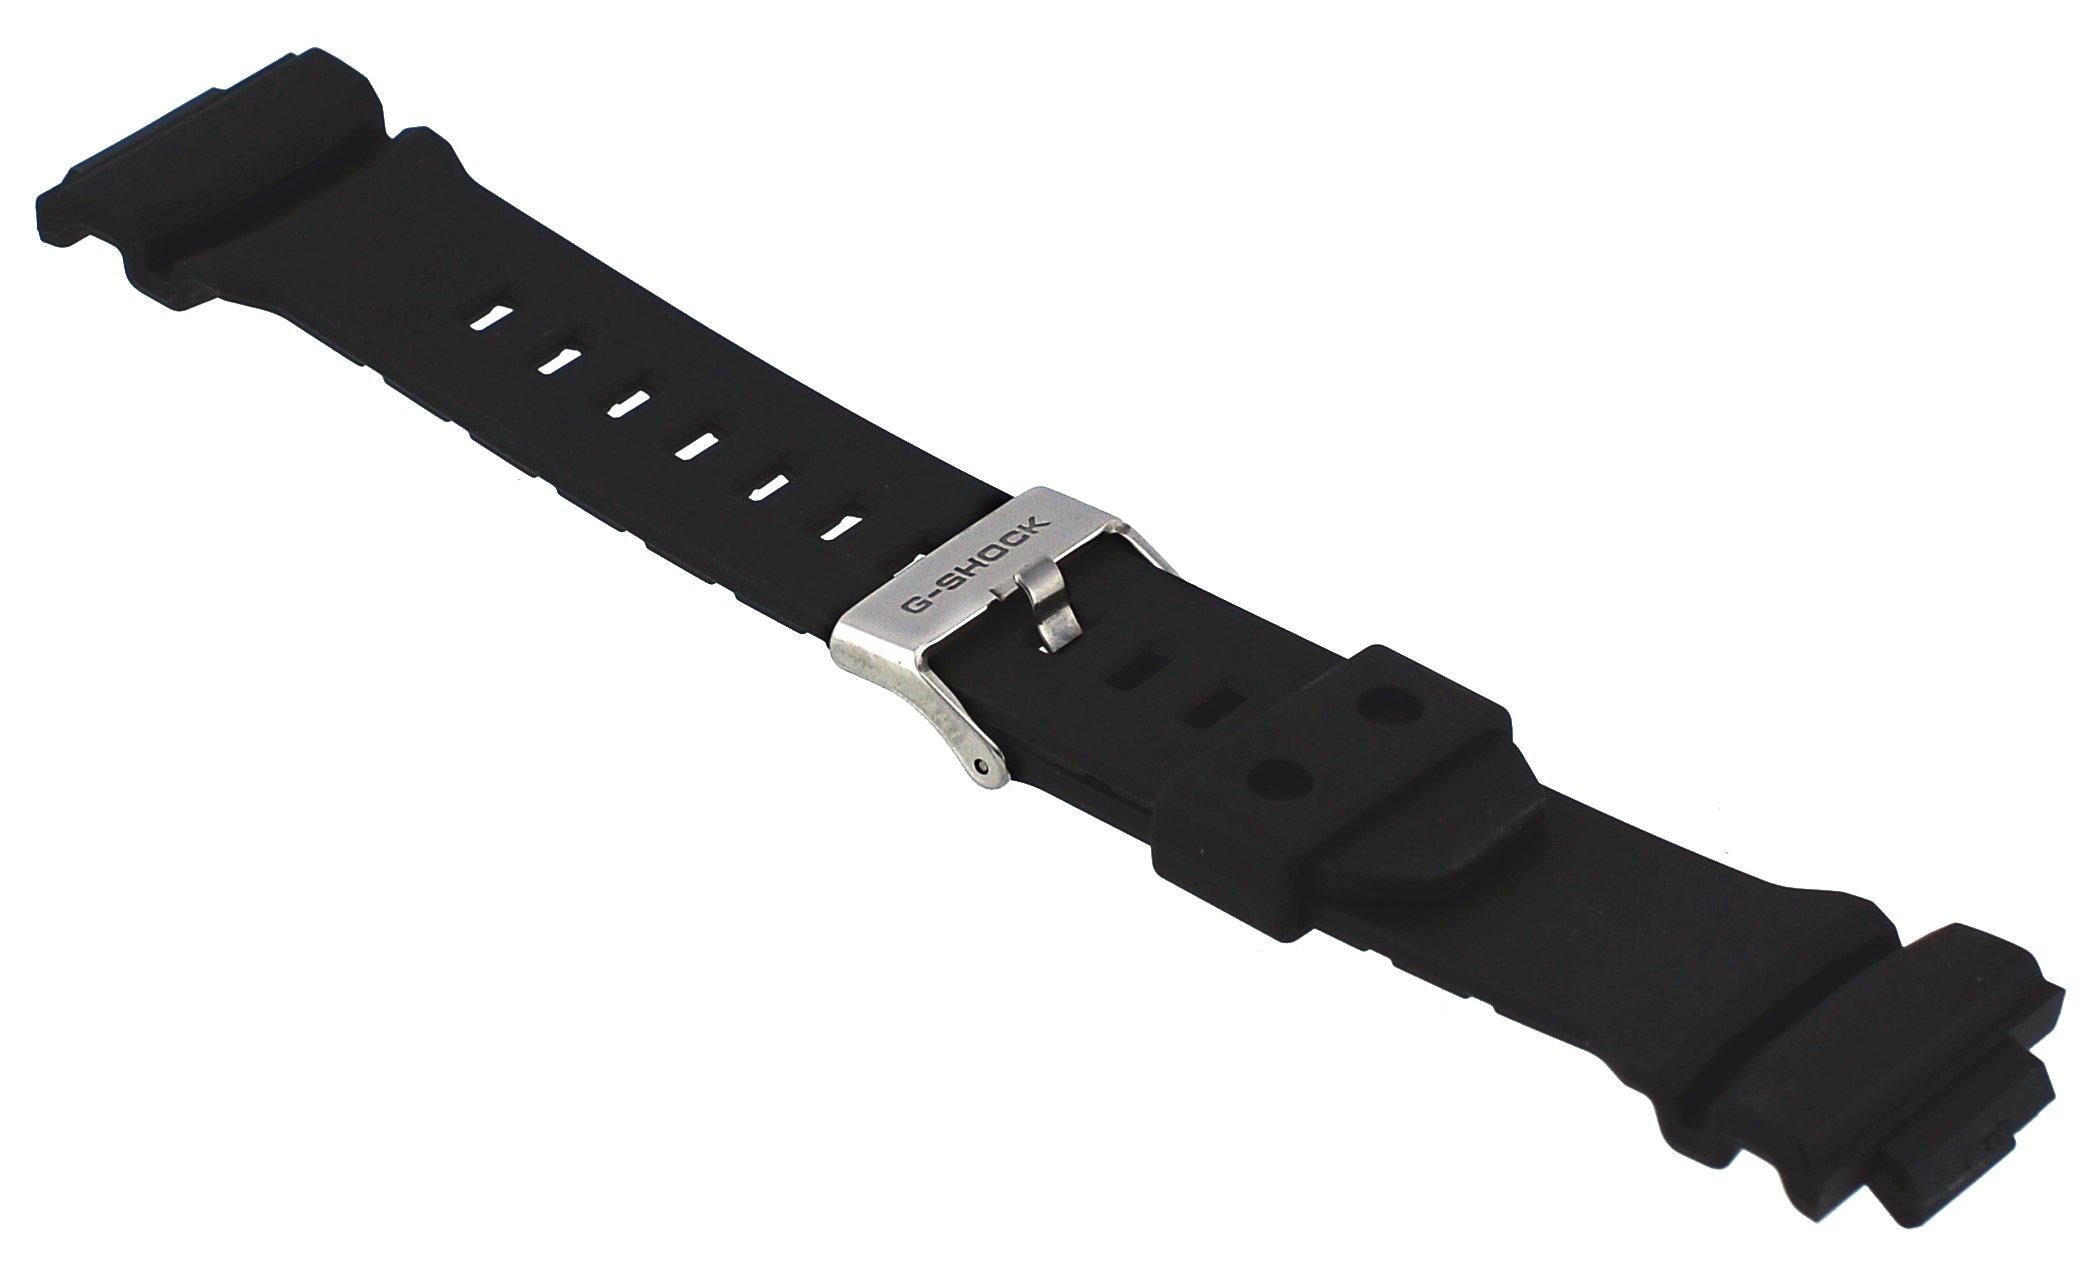 Casio Genuine Replacement Strap Band for G Shock Watch Model # Ga200-1 Ga-200-1